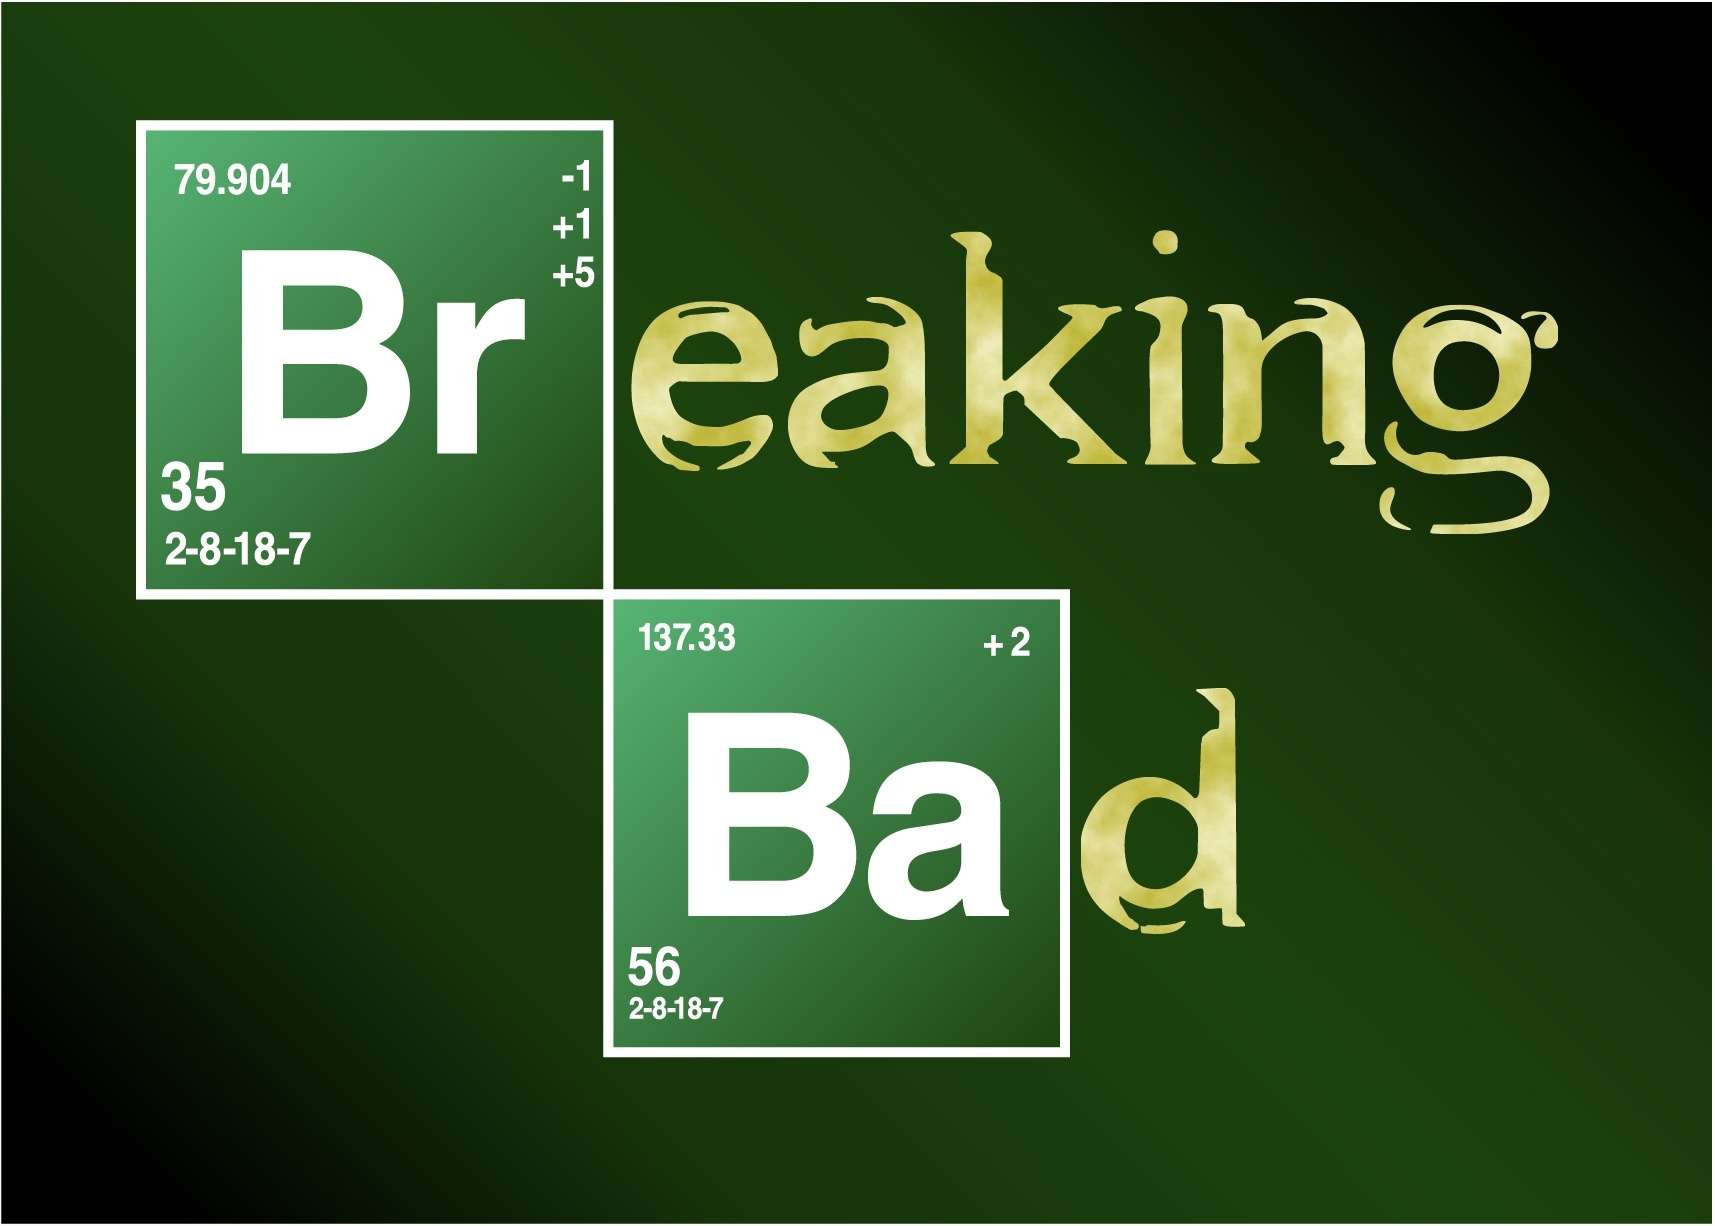 Breaking Bad Logo png